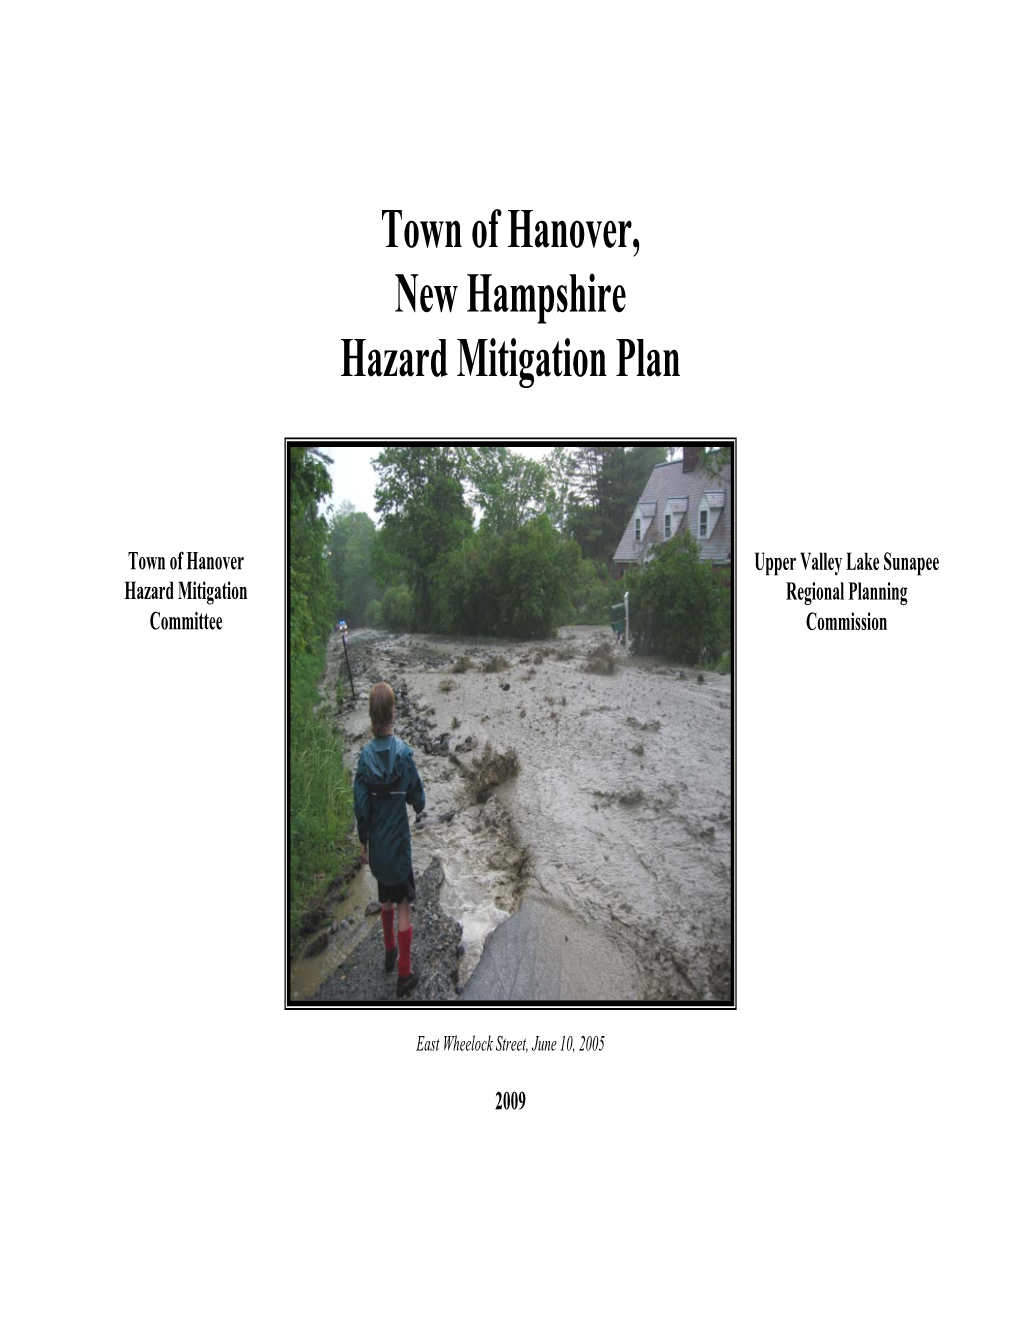 Town of Hanover, New Hampshire Hazard Mitigation Plan